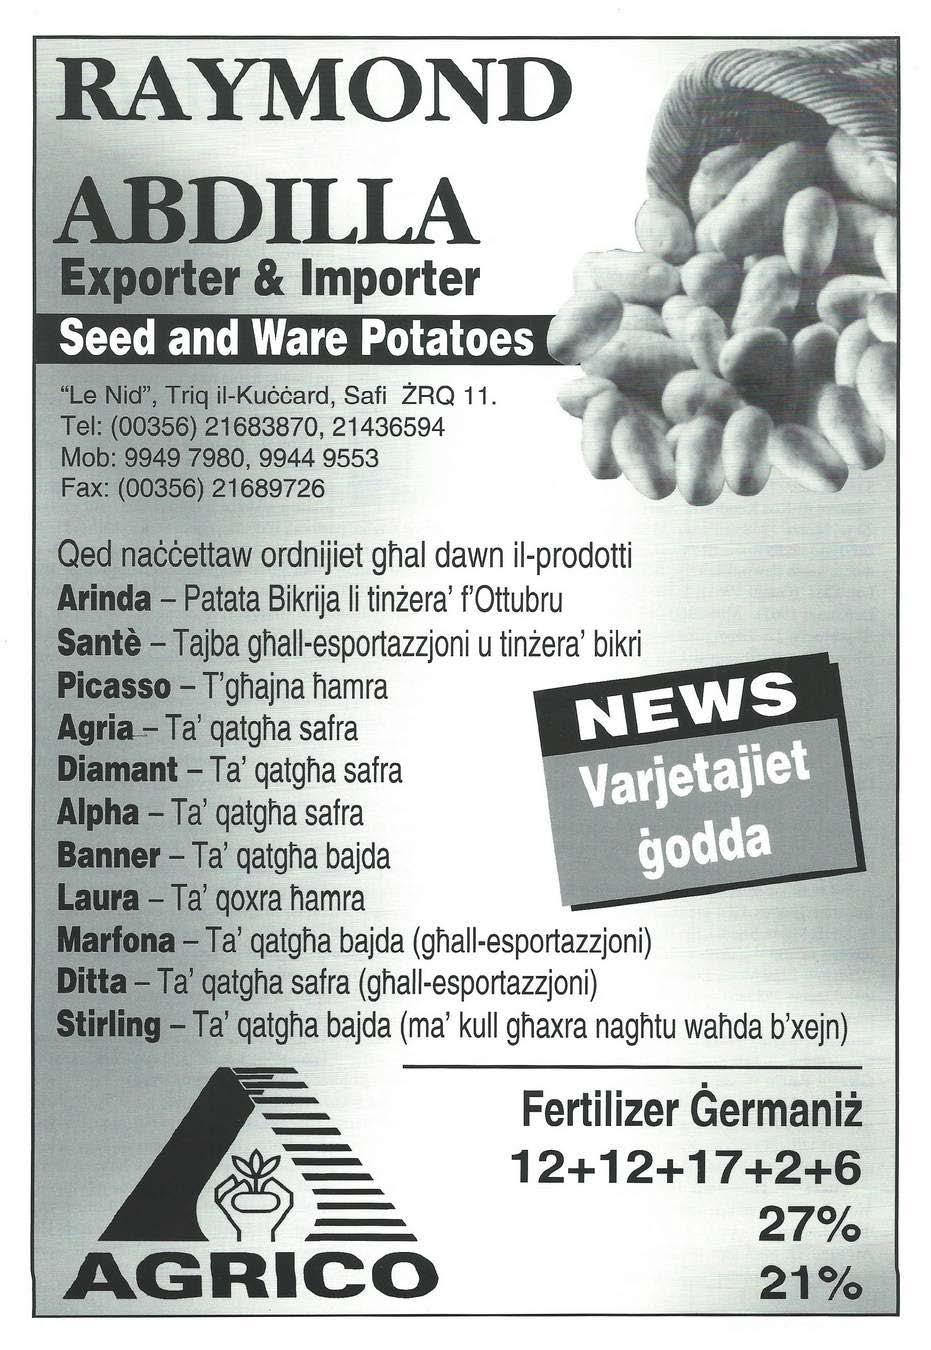 Exporter & lmporter "Le Nid", Triq il-kuċċard, Safi ŻRQ 11.